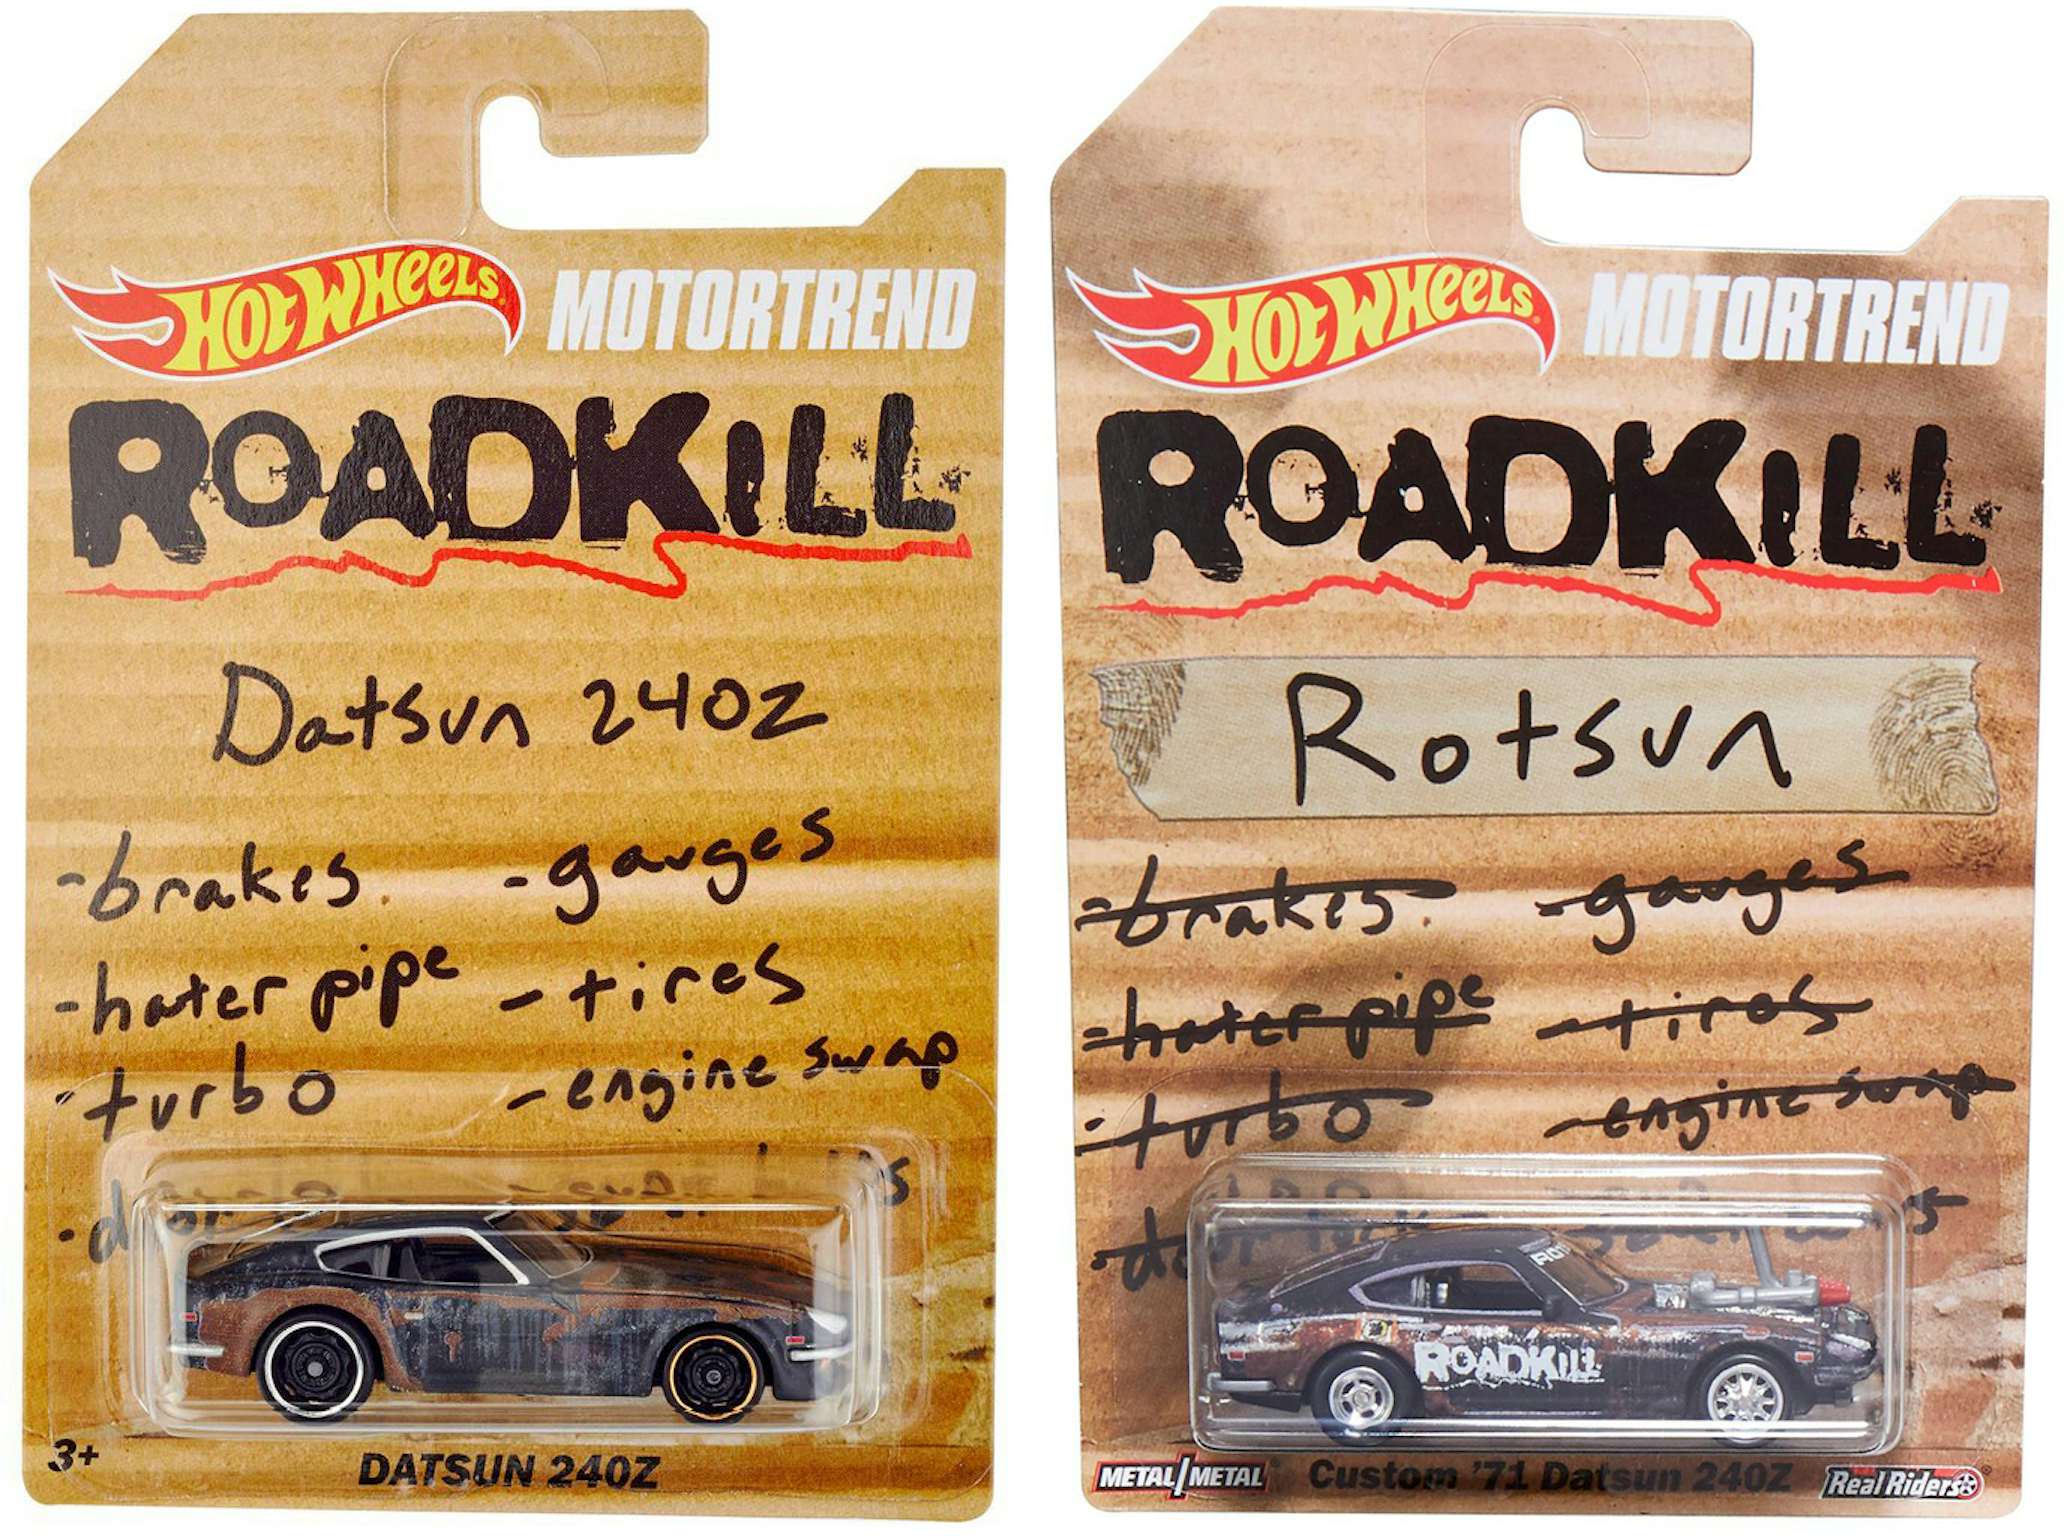 Hot Wheels MOTORTREND ROADKILL Rotsun Custom '71 & Datsun 240Z Set US